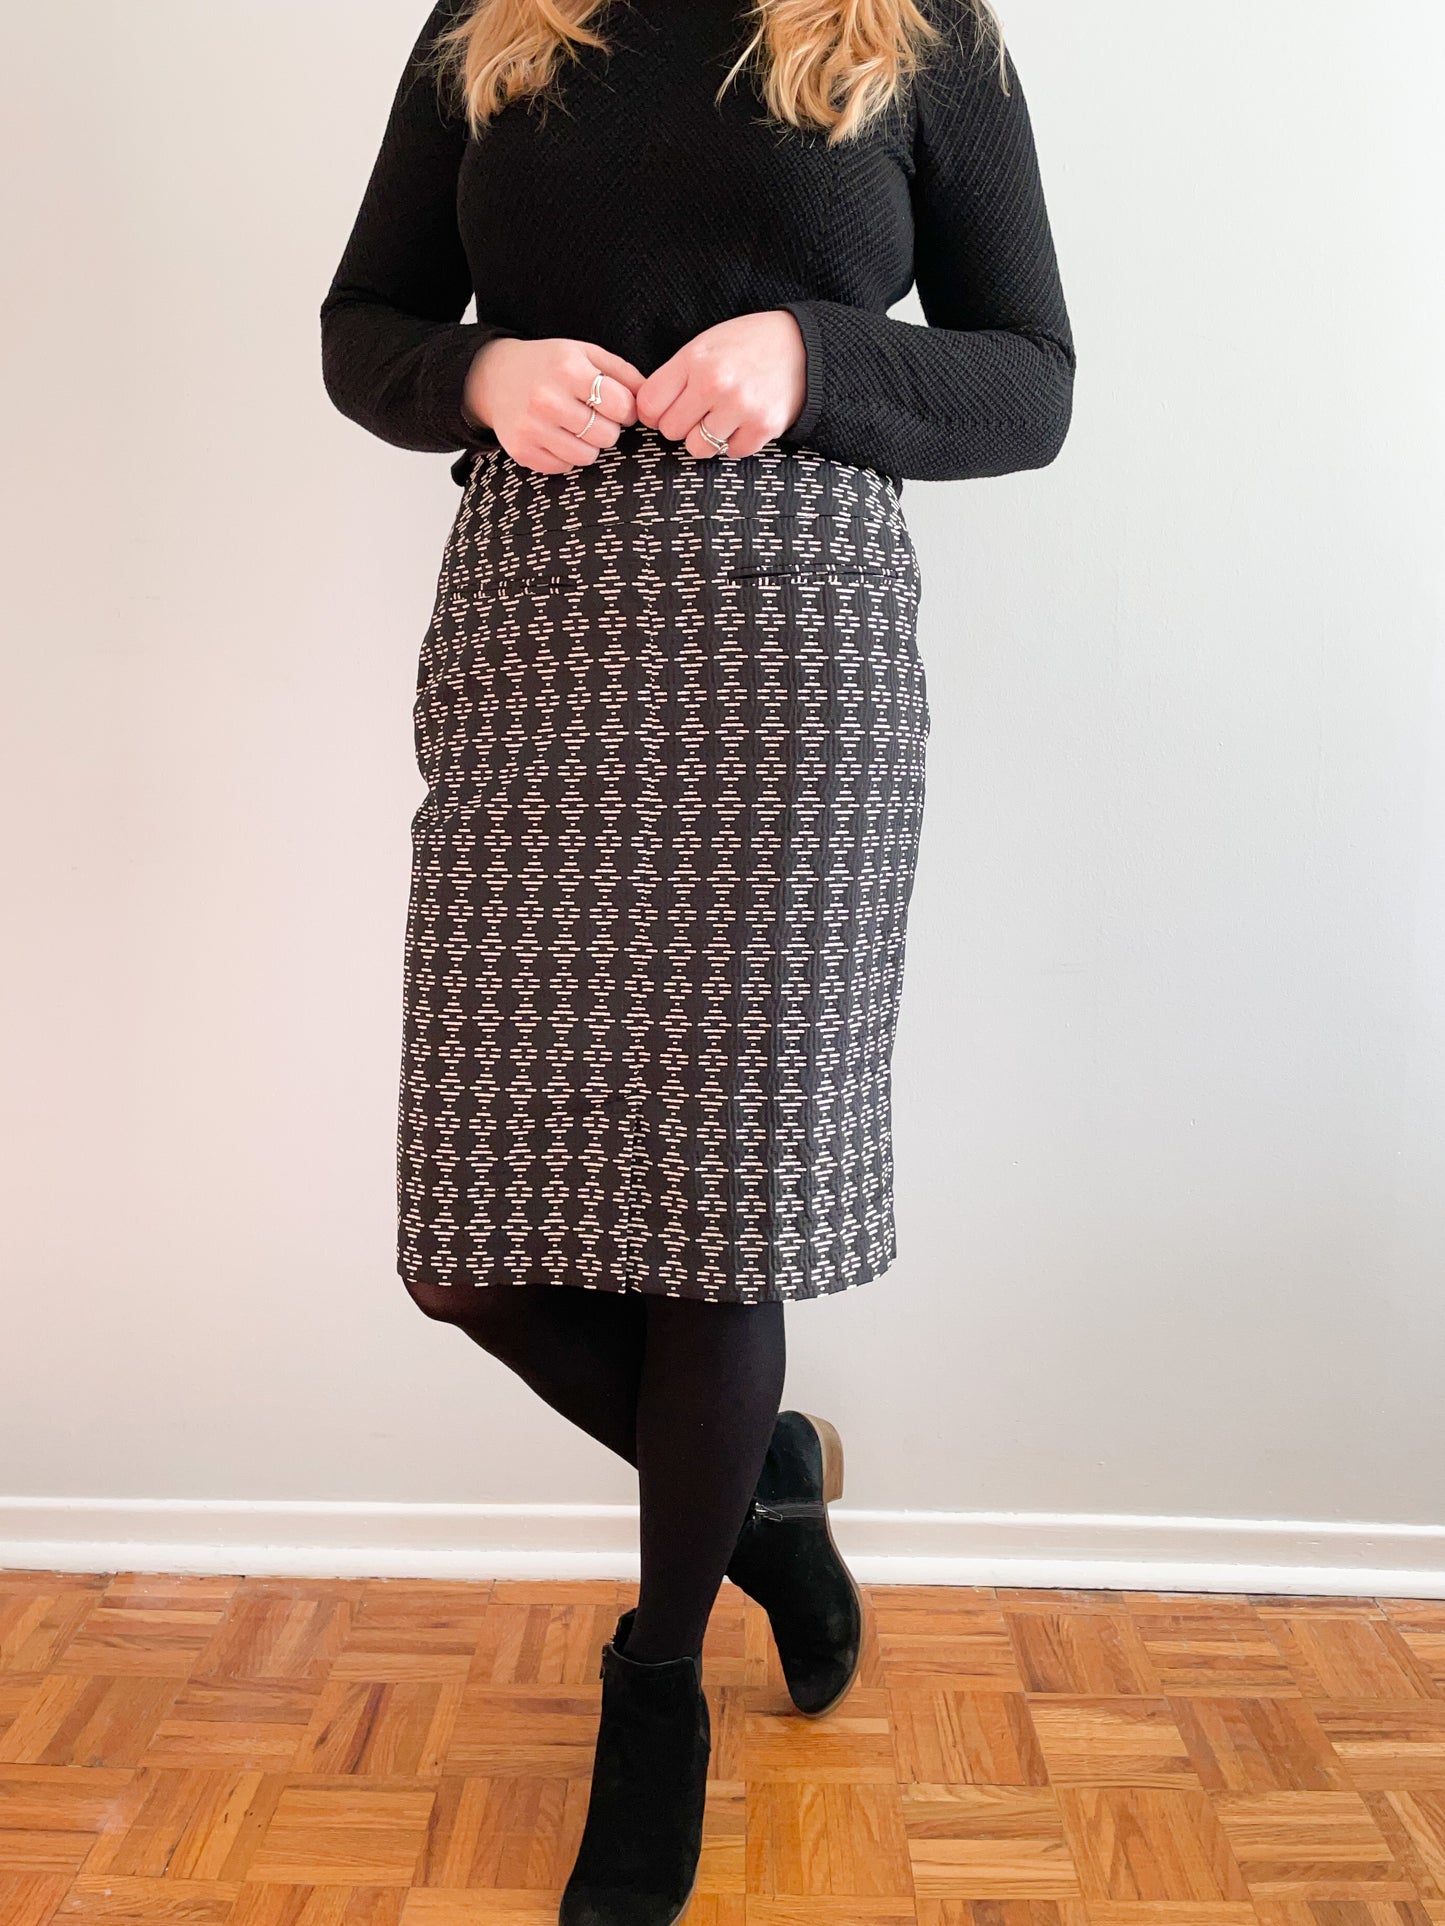 Black & White Cotton Pencil Skirt - Size 6/8